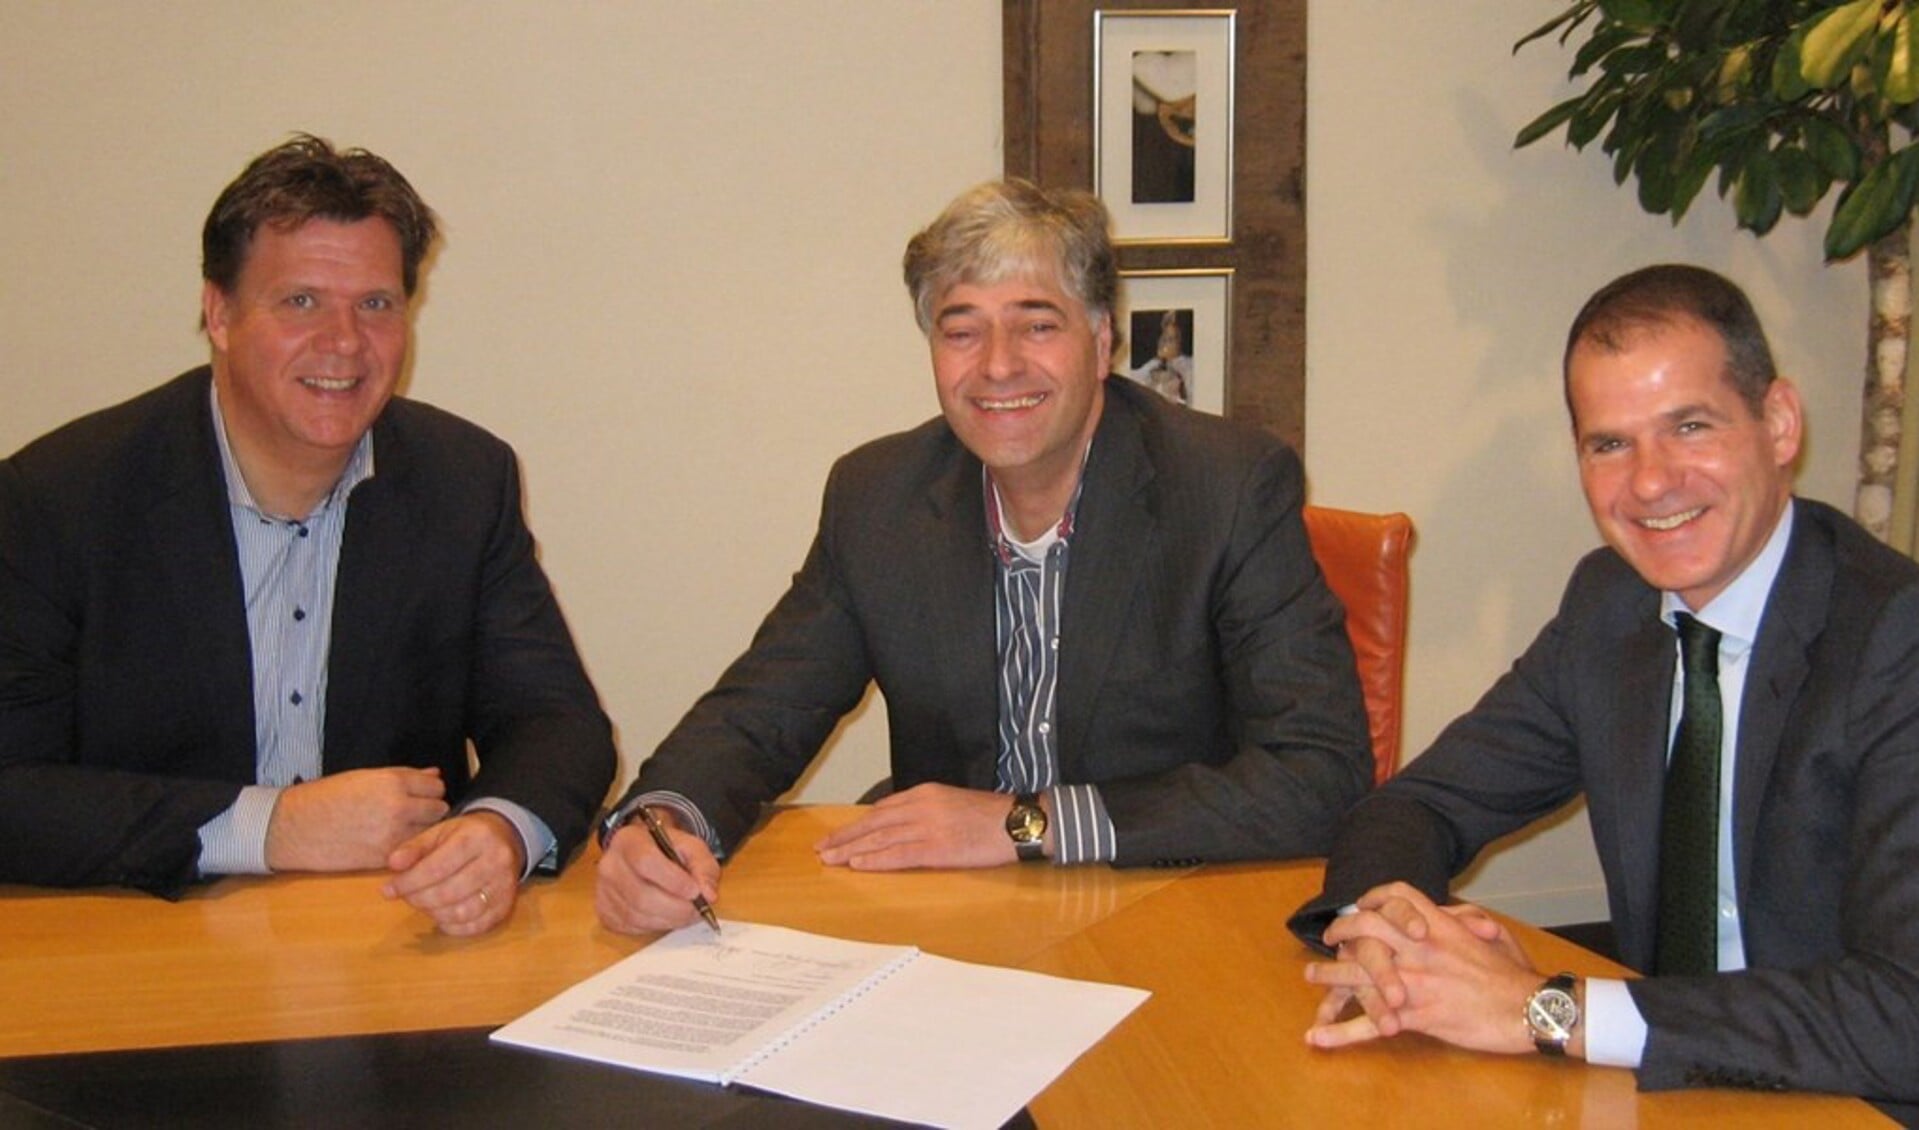 V.l.n.r.: T. van der Horst (Ontwikkelingsmanager BPD), wethouder R. Visser en C. van Wanrooij (directeur Van Wanrooij projectontwikkeling) ondertekenen de overeenkomsten.